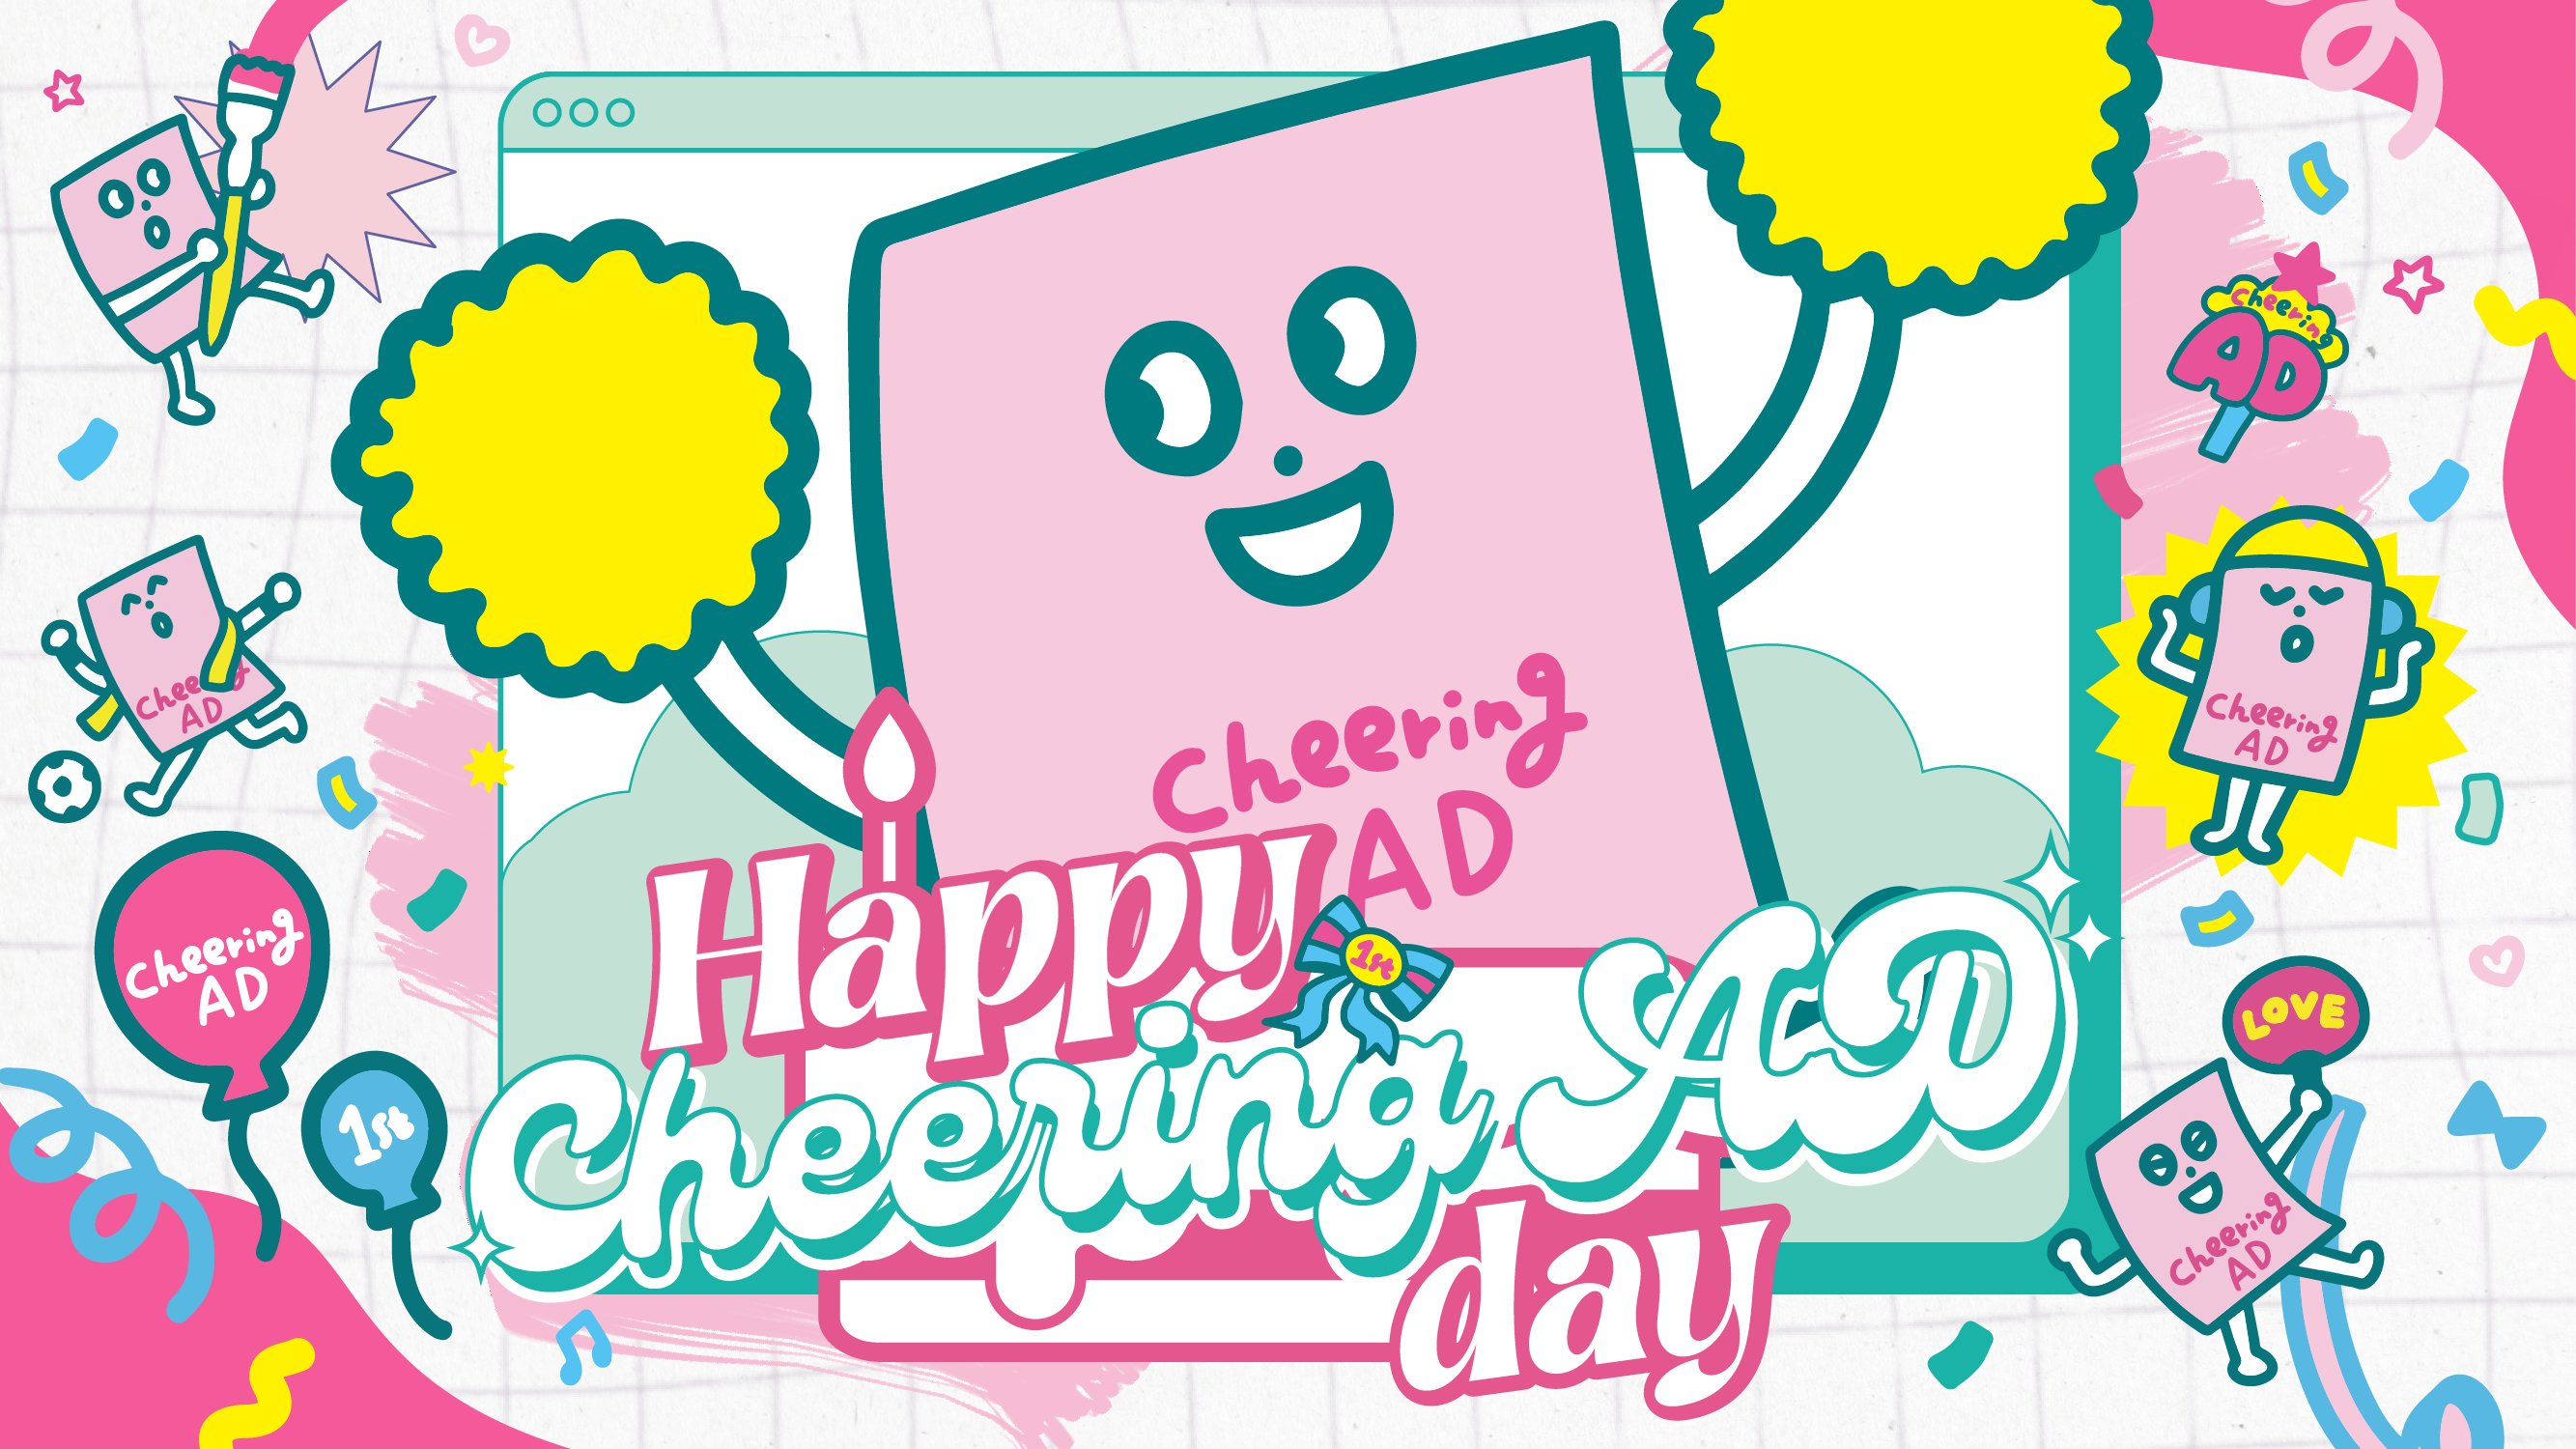 Happy Chering AD Day